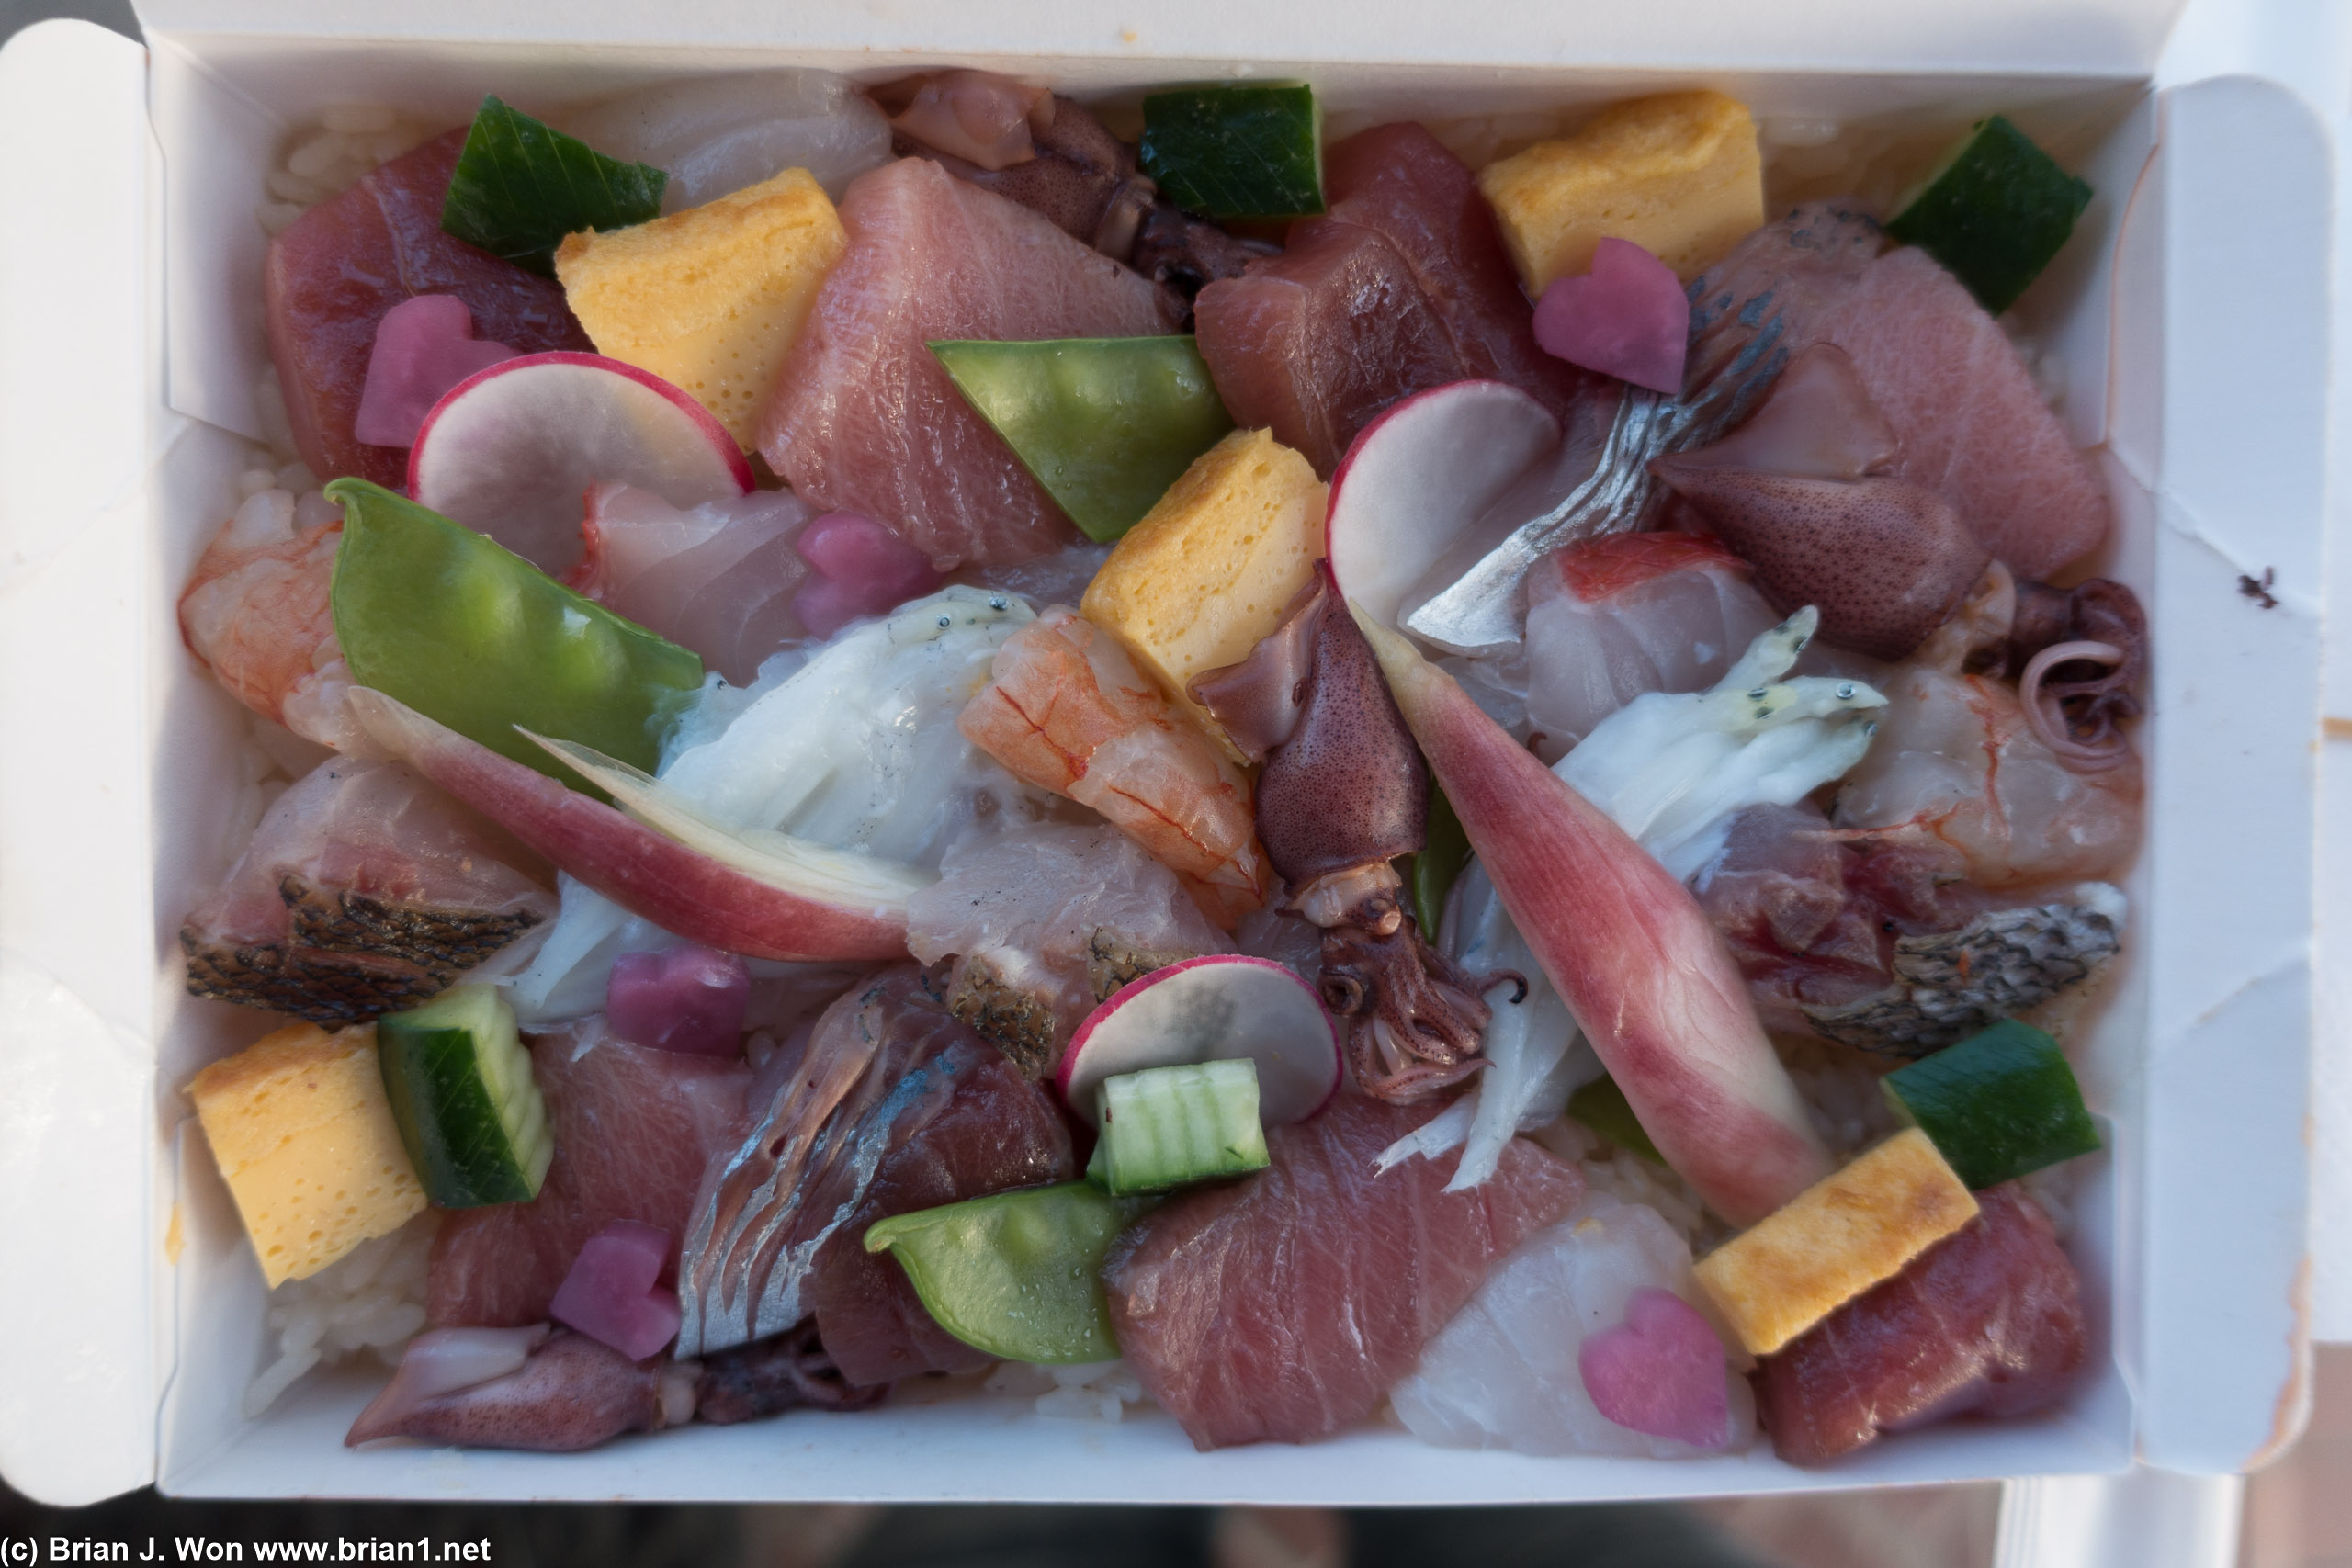 Ice fish (shirauo), sparking squid (hotaru ika- firefly squid), halibut (hirame), black seabream (kuro dai), bluefin tuna (hon maguro), bluefin medium toro (chutoro), golden eye snapper (kinmedai), grunts (isaki), shrimp (ama ebi kobujime), red snapper (mai da), spanish mackerel (aji), tamago, daikon.